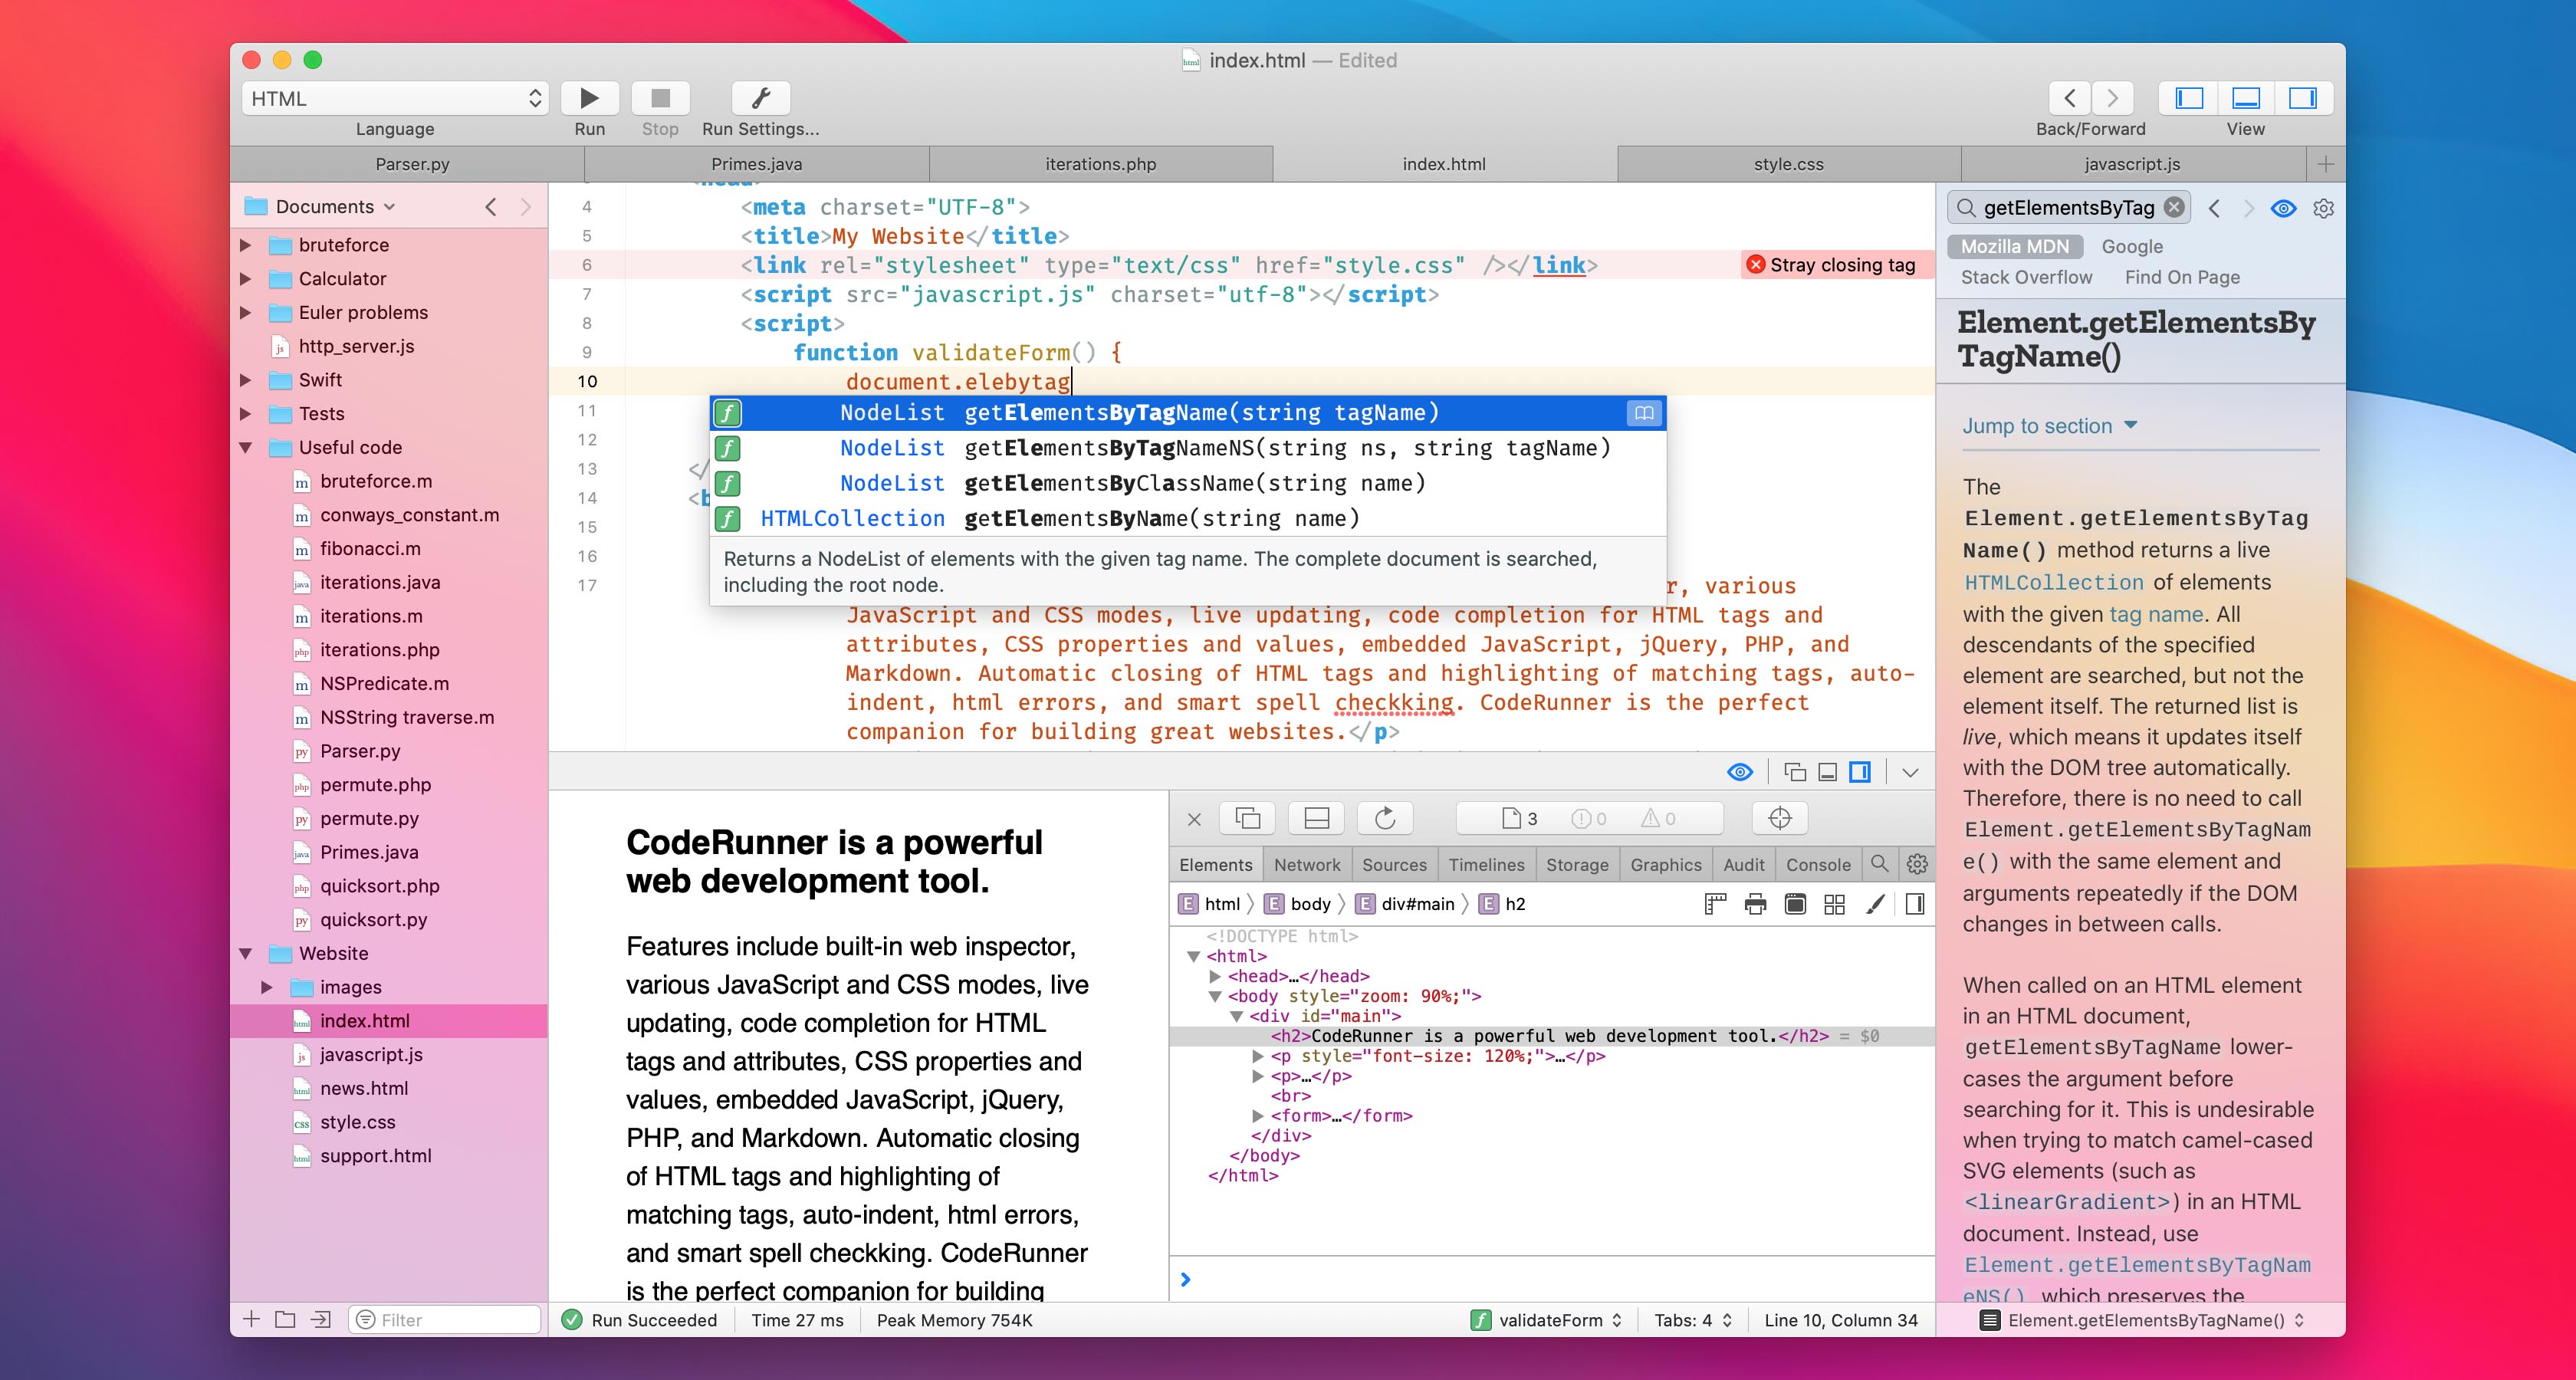 code writing software for mac